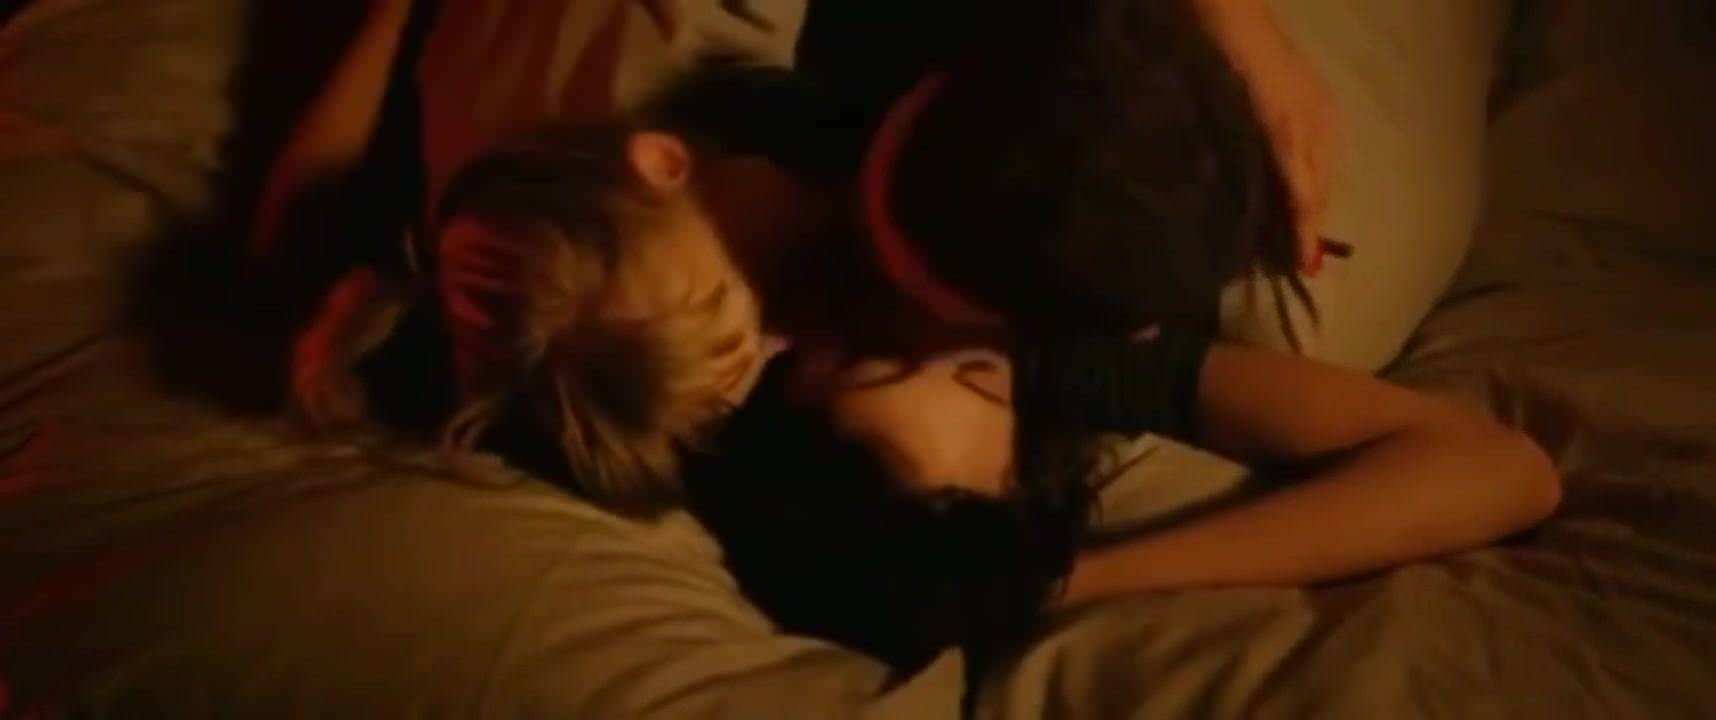 Sweet threesomes movie clip